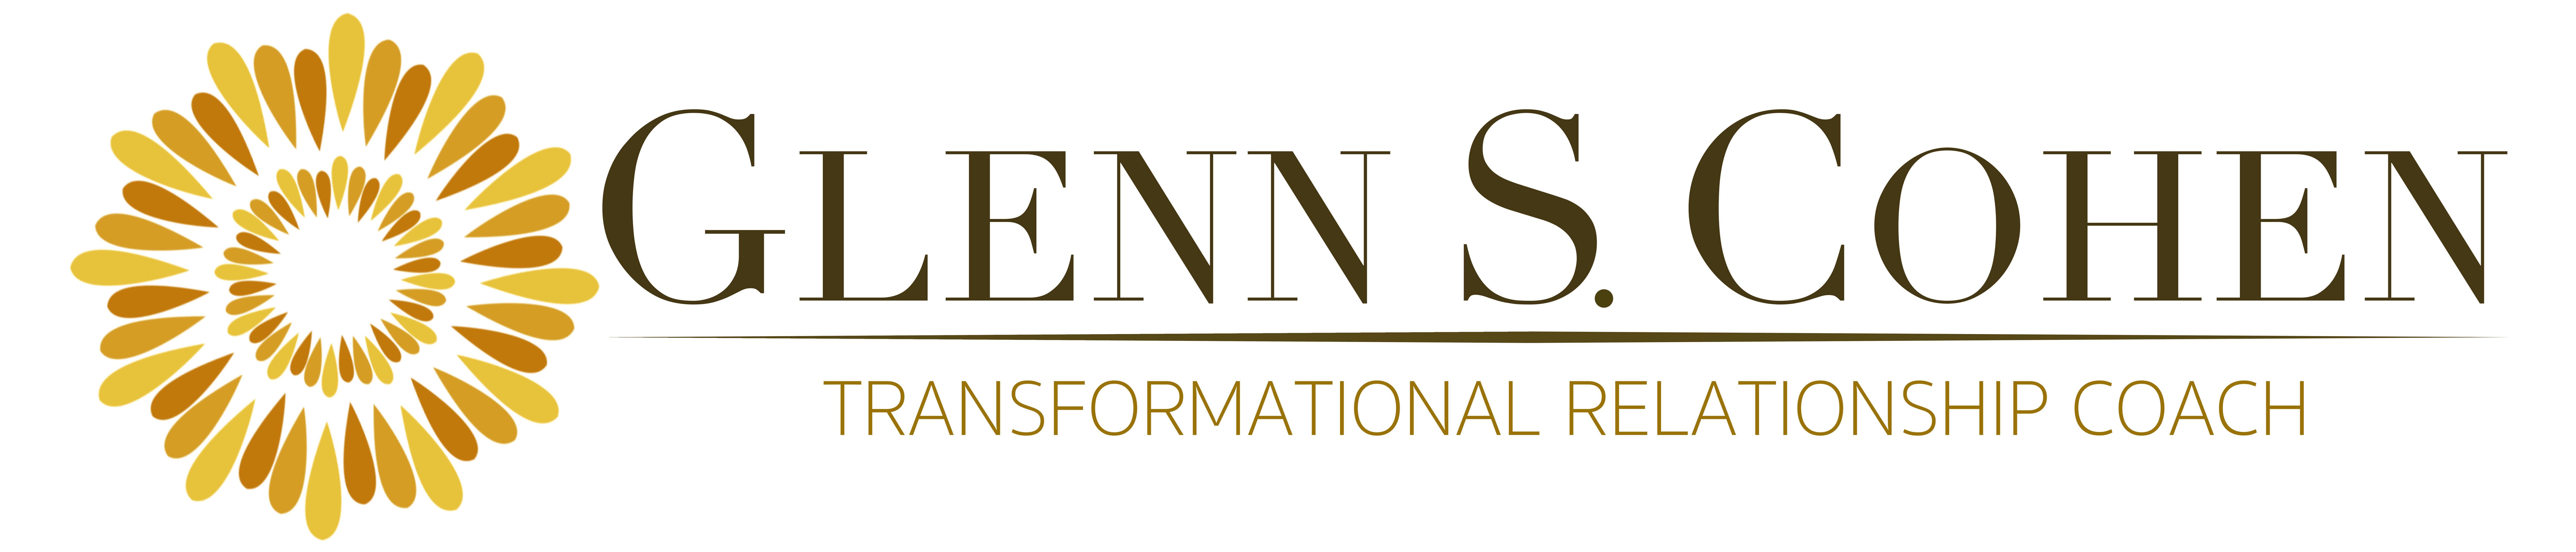 Glenn S. Cohen - Transformational Relationship Coach